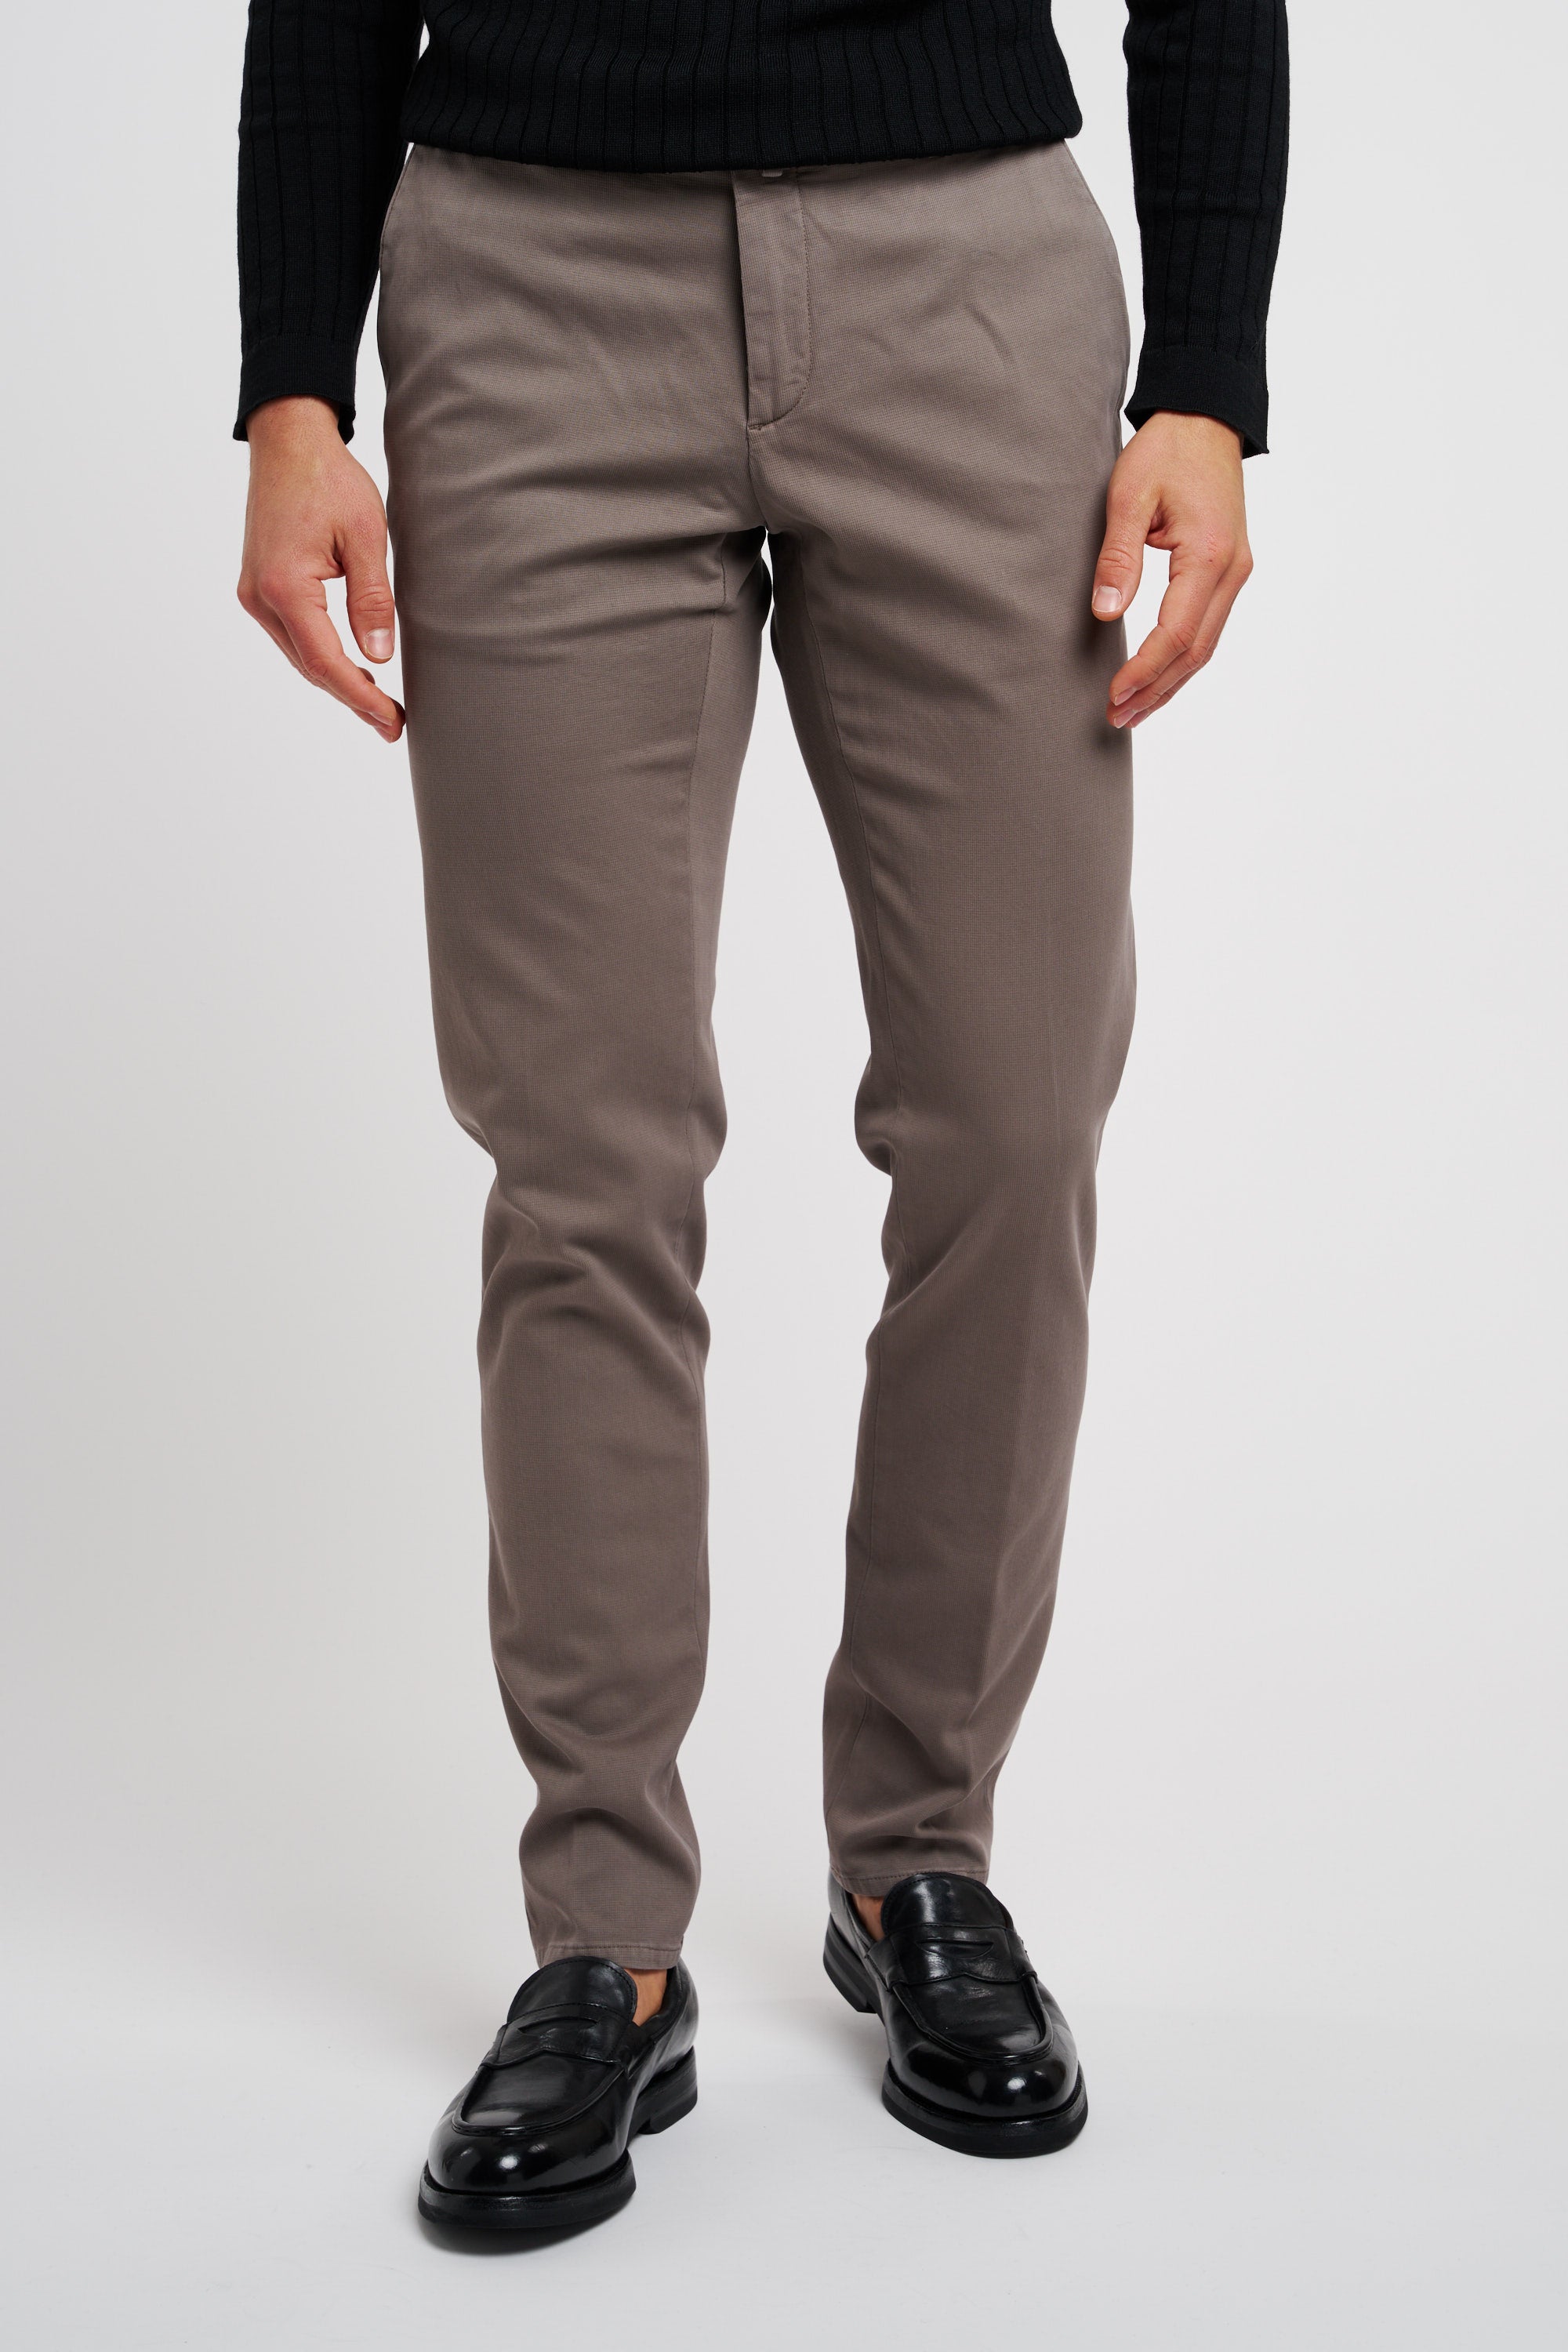 GTA Federico Mixed Cotton Pants Grey-3